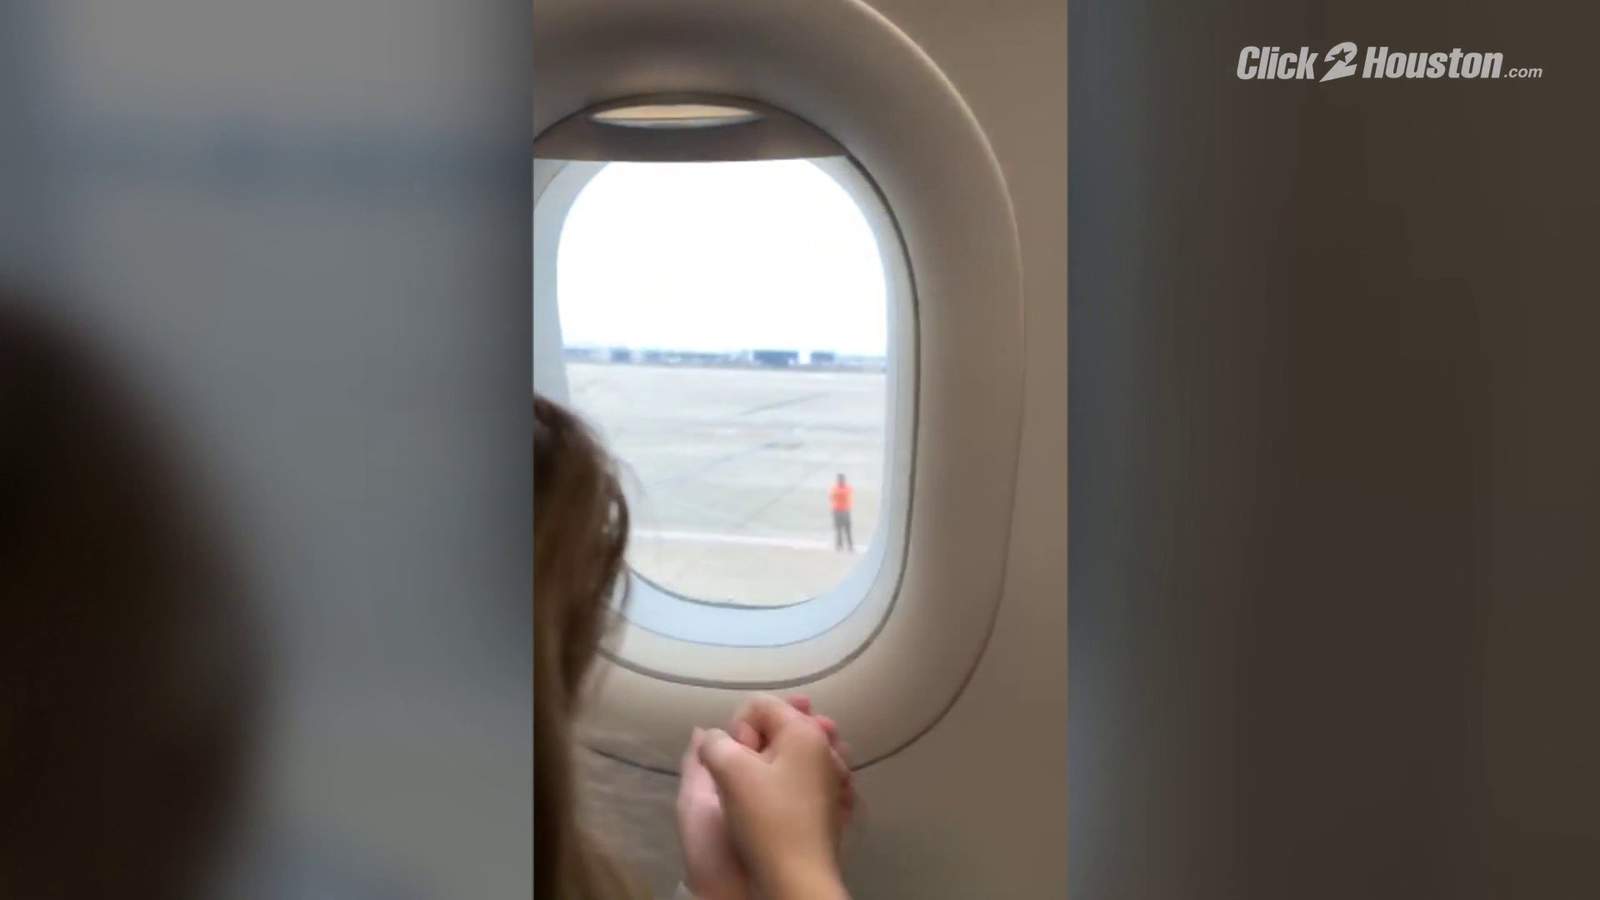 VIDEO: Kid plays rock-paper-scissors with Houston tarmac worker through plane window